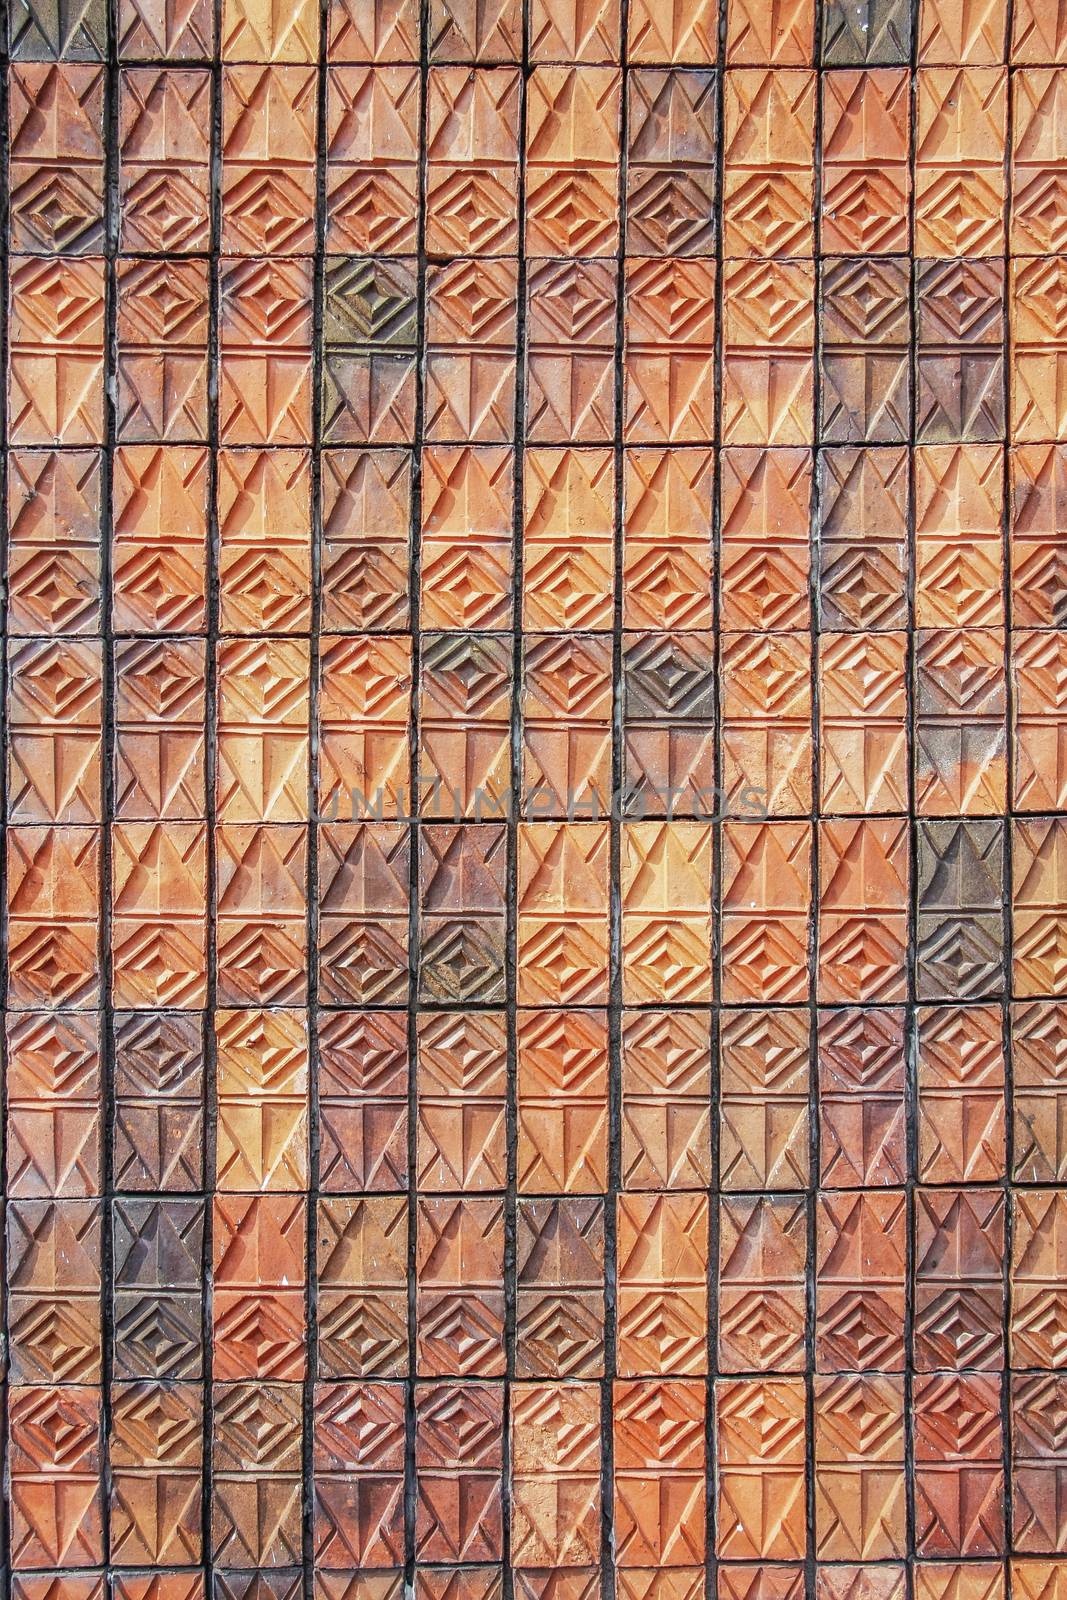 brick stone texture with pattern, modern style block wall